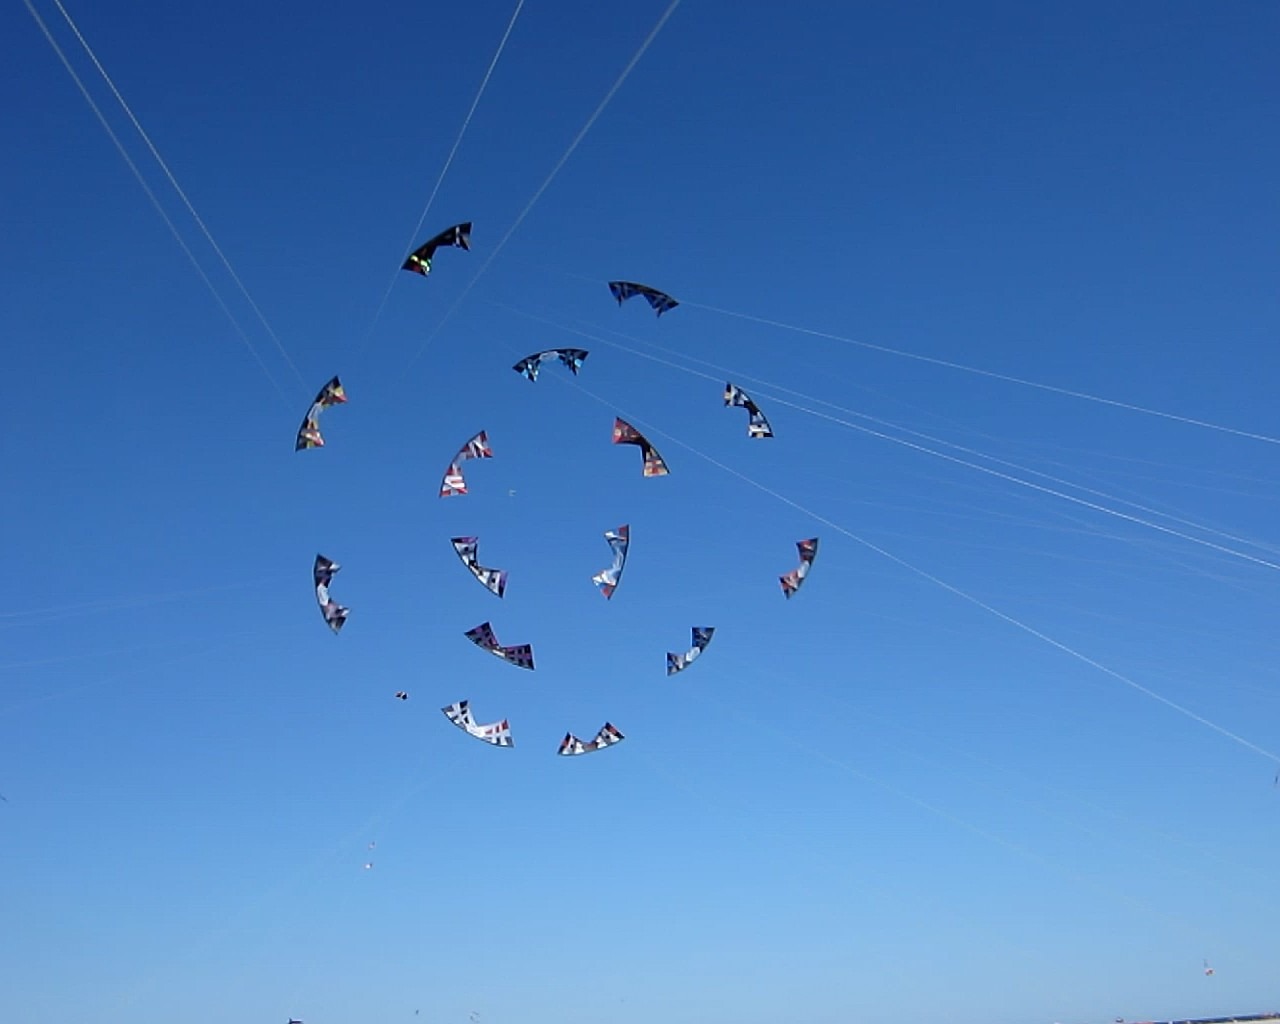 A variety of kites